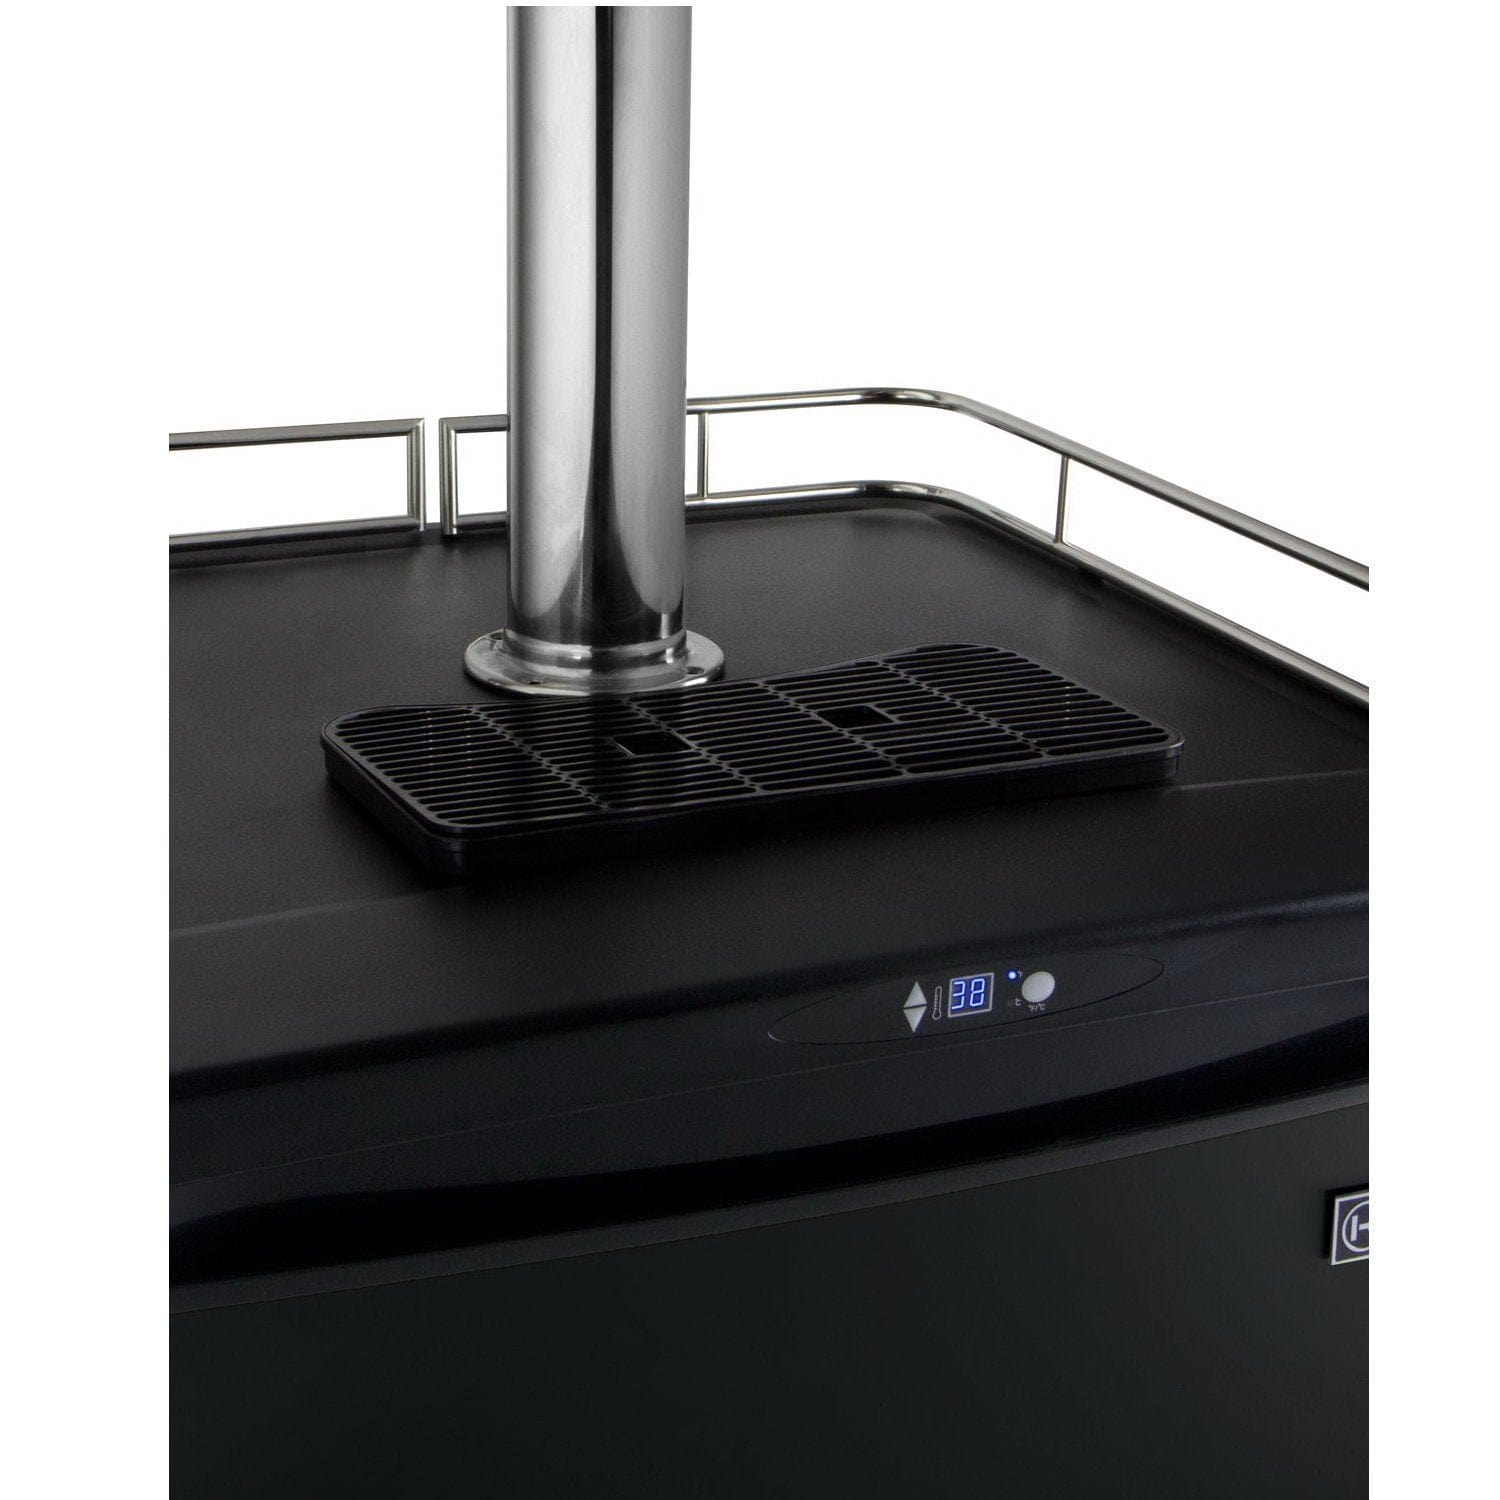 Kegco Dual Faucet Commercial Grade Digital Kombucharator - Black Cabinet with Black Door